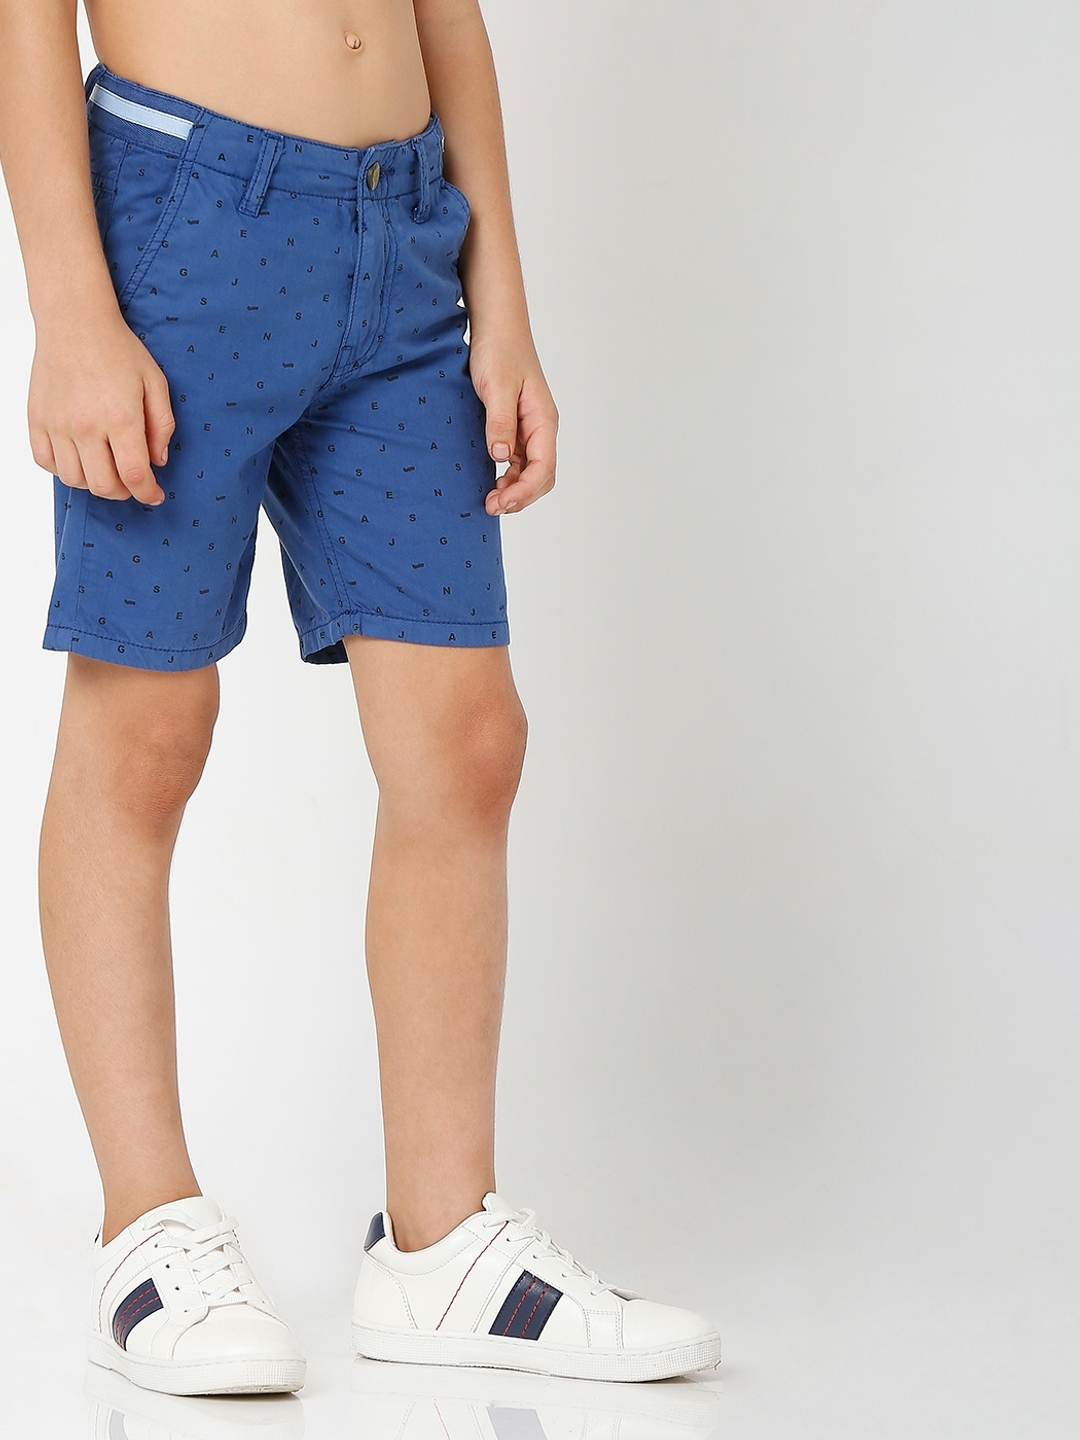 Boys Santo Jr Micro Shorts